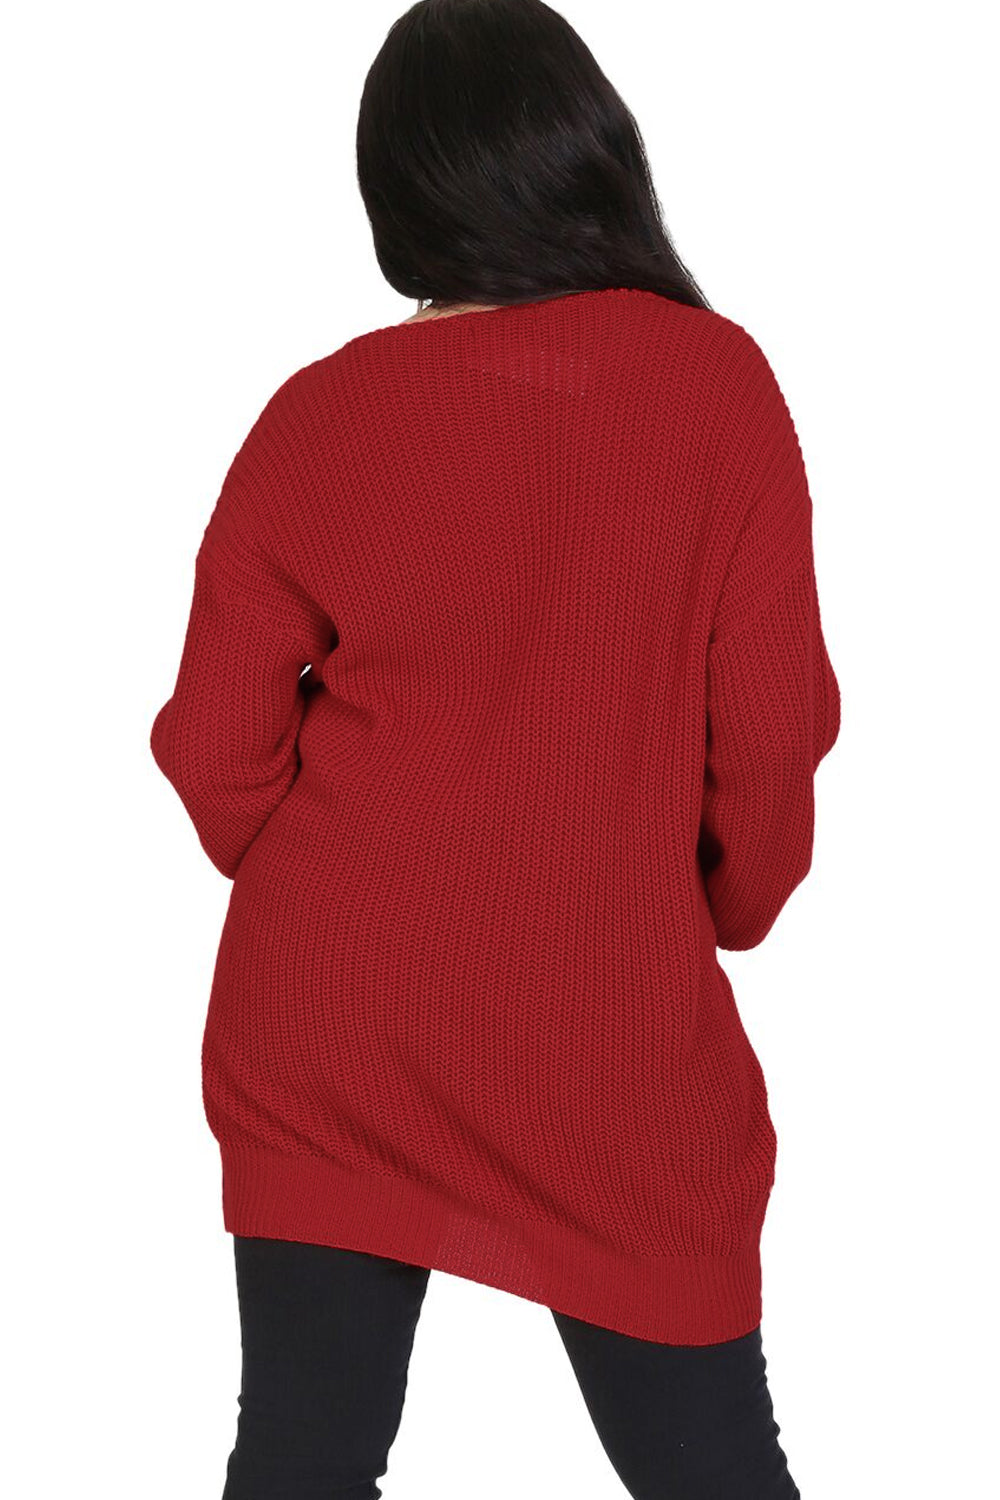 V Neck Chunky Knit Red Oversize Jumper - bejealous-com